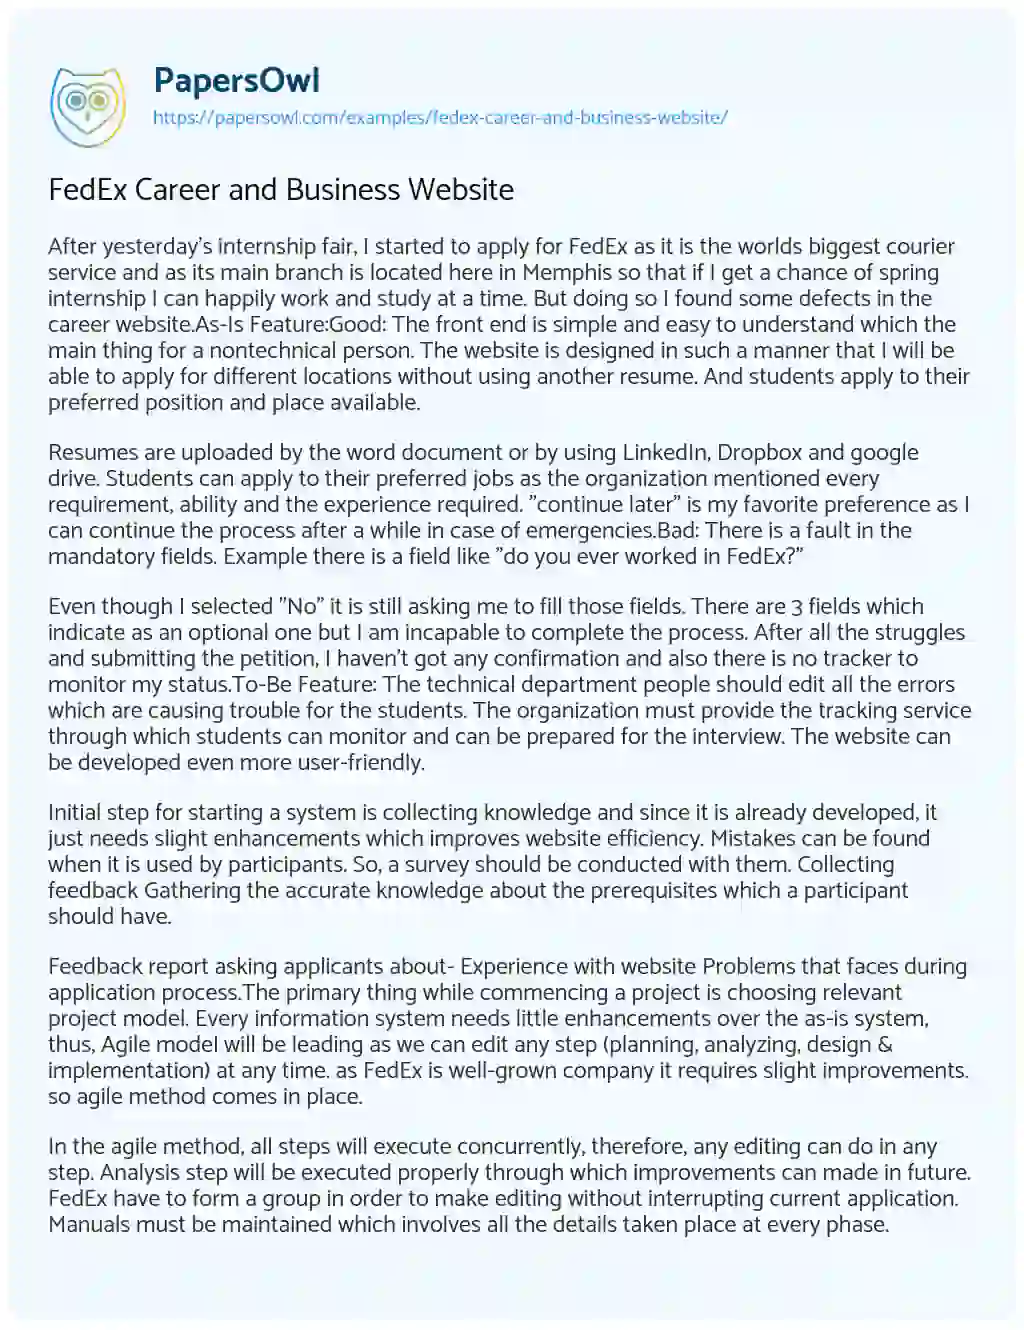 Essay on FedEx Career and Business Website